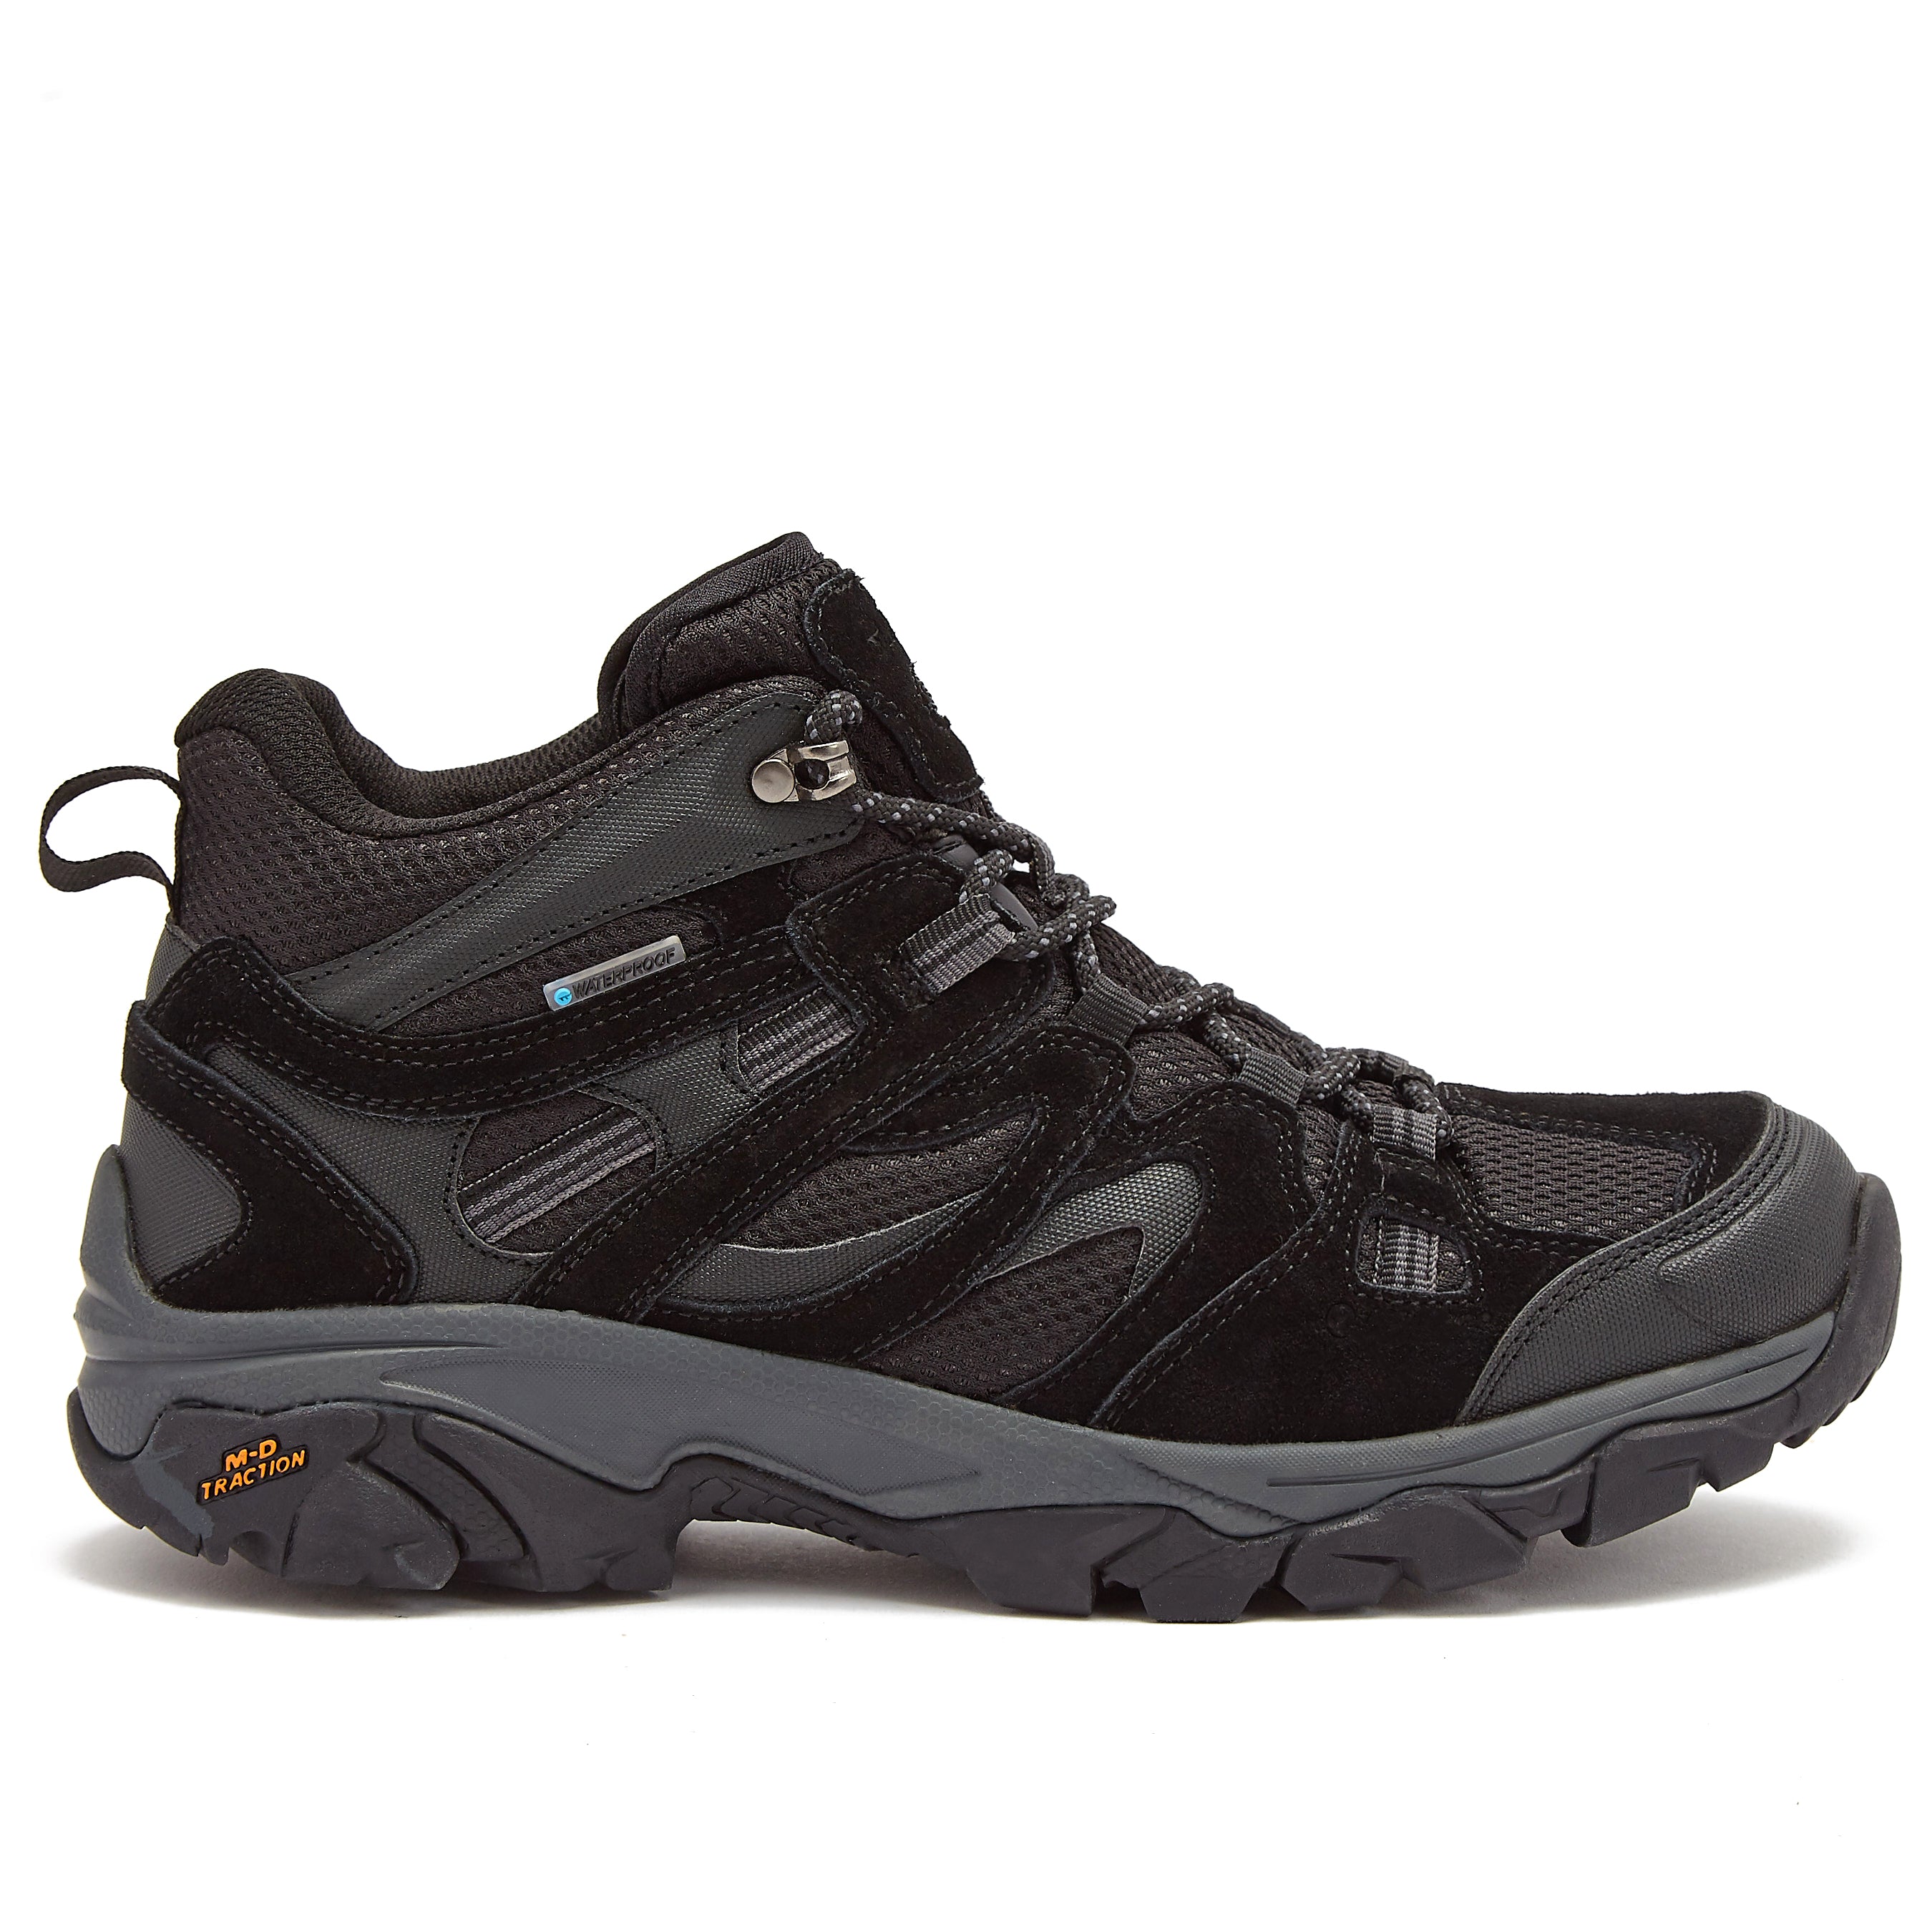 Men's Waterproof Hiking Boots | Outdoor Hiking Shoes for Men | Hi-Tec ...